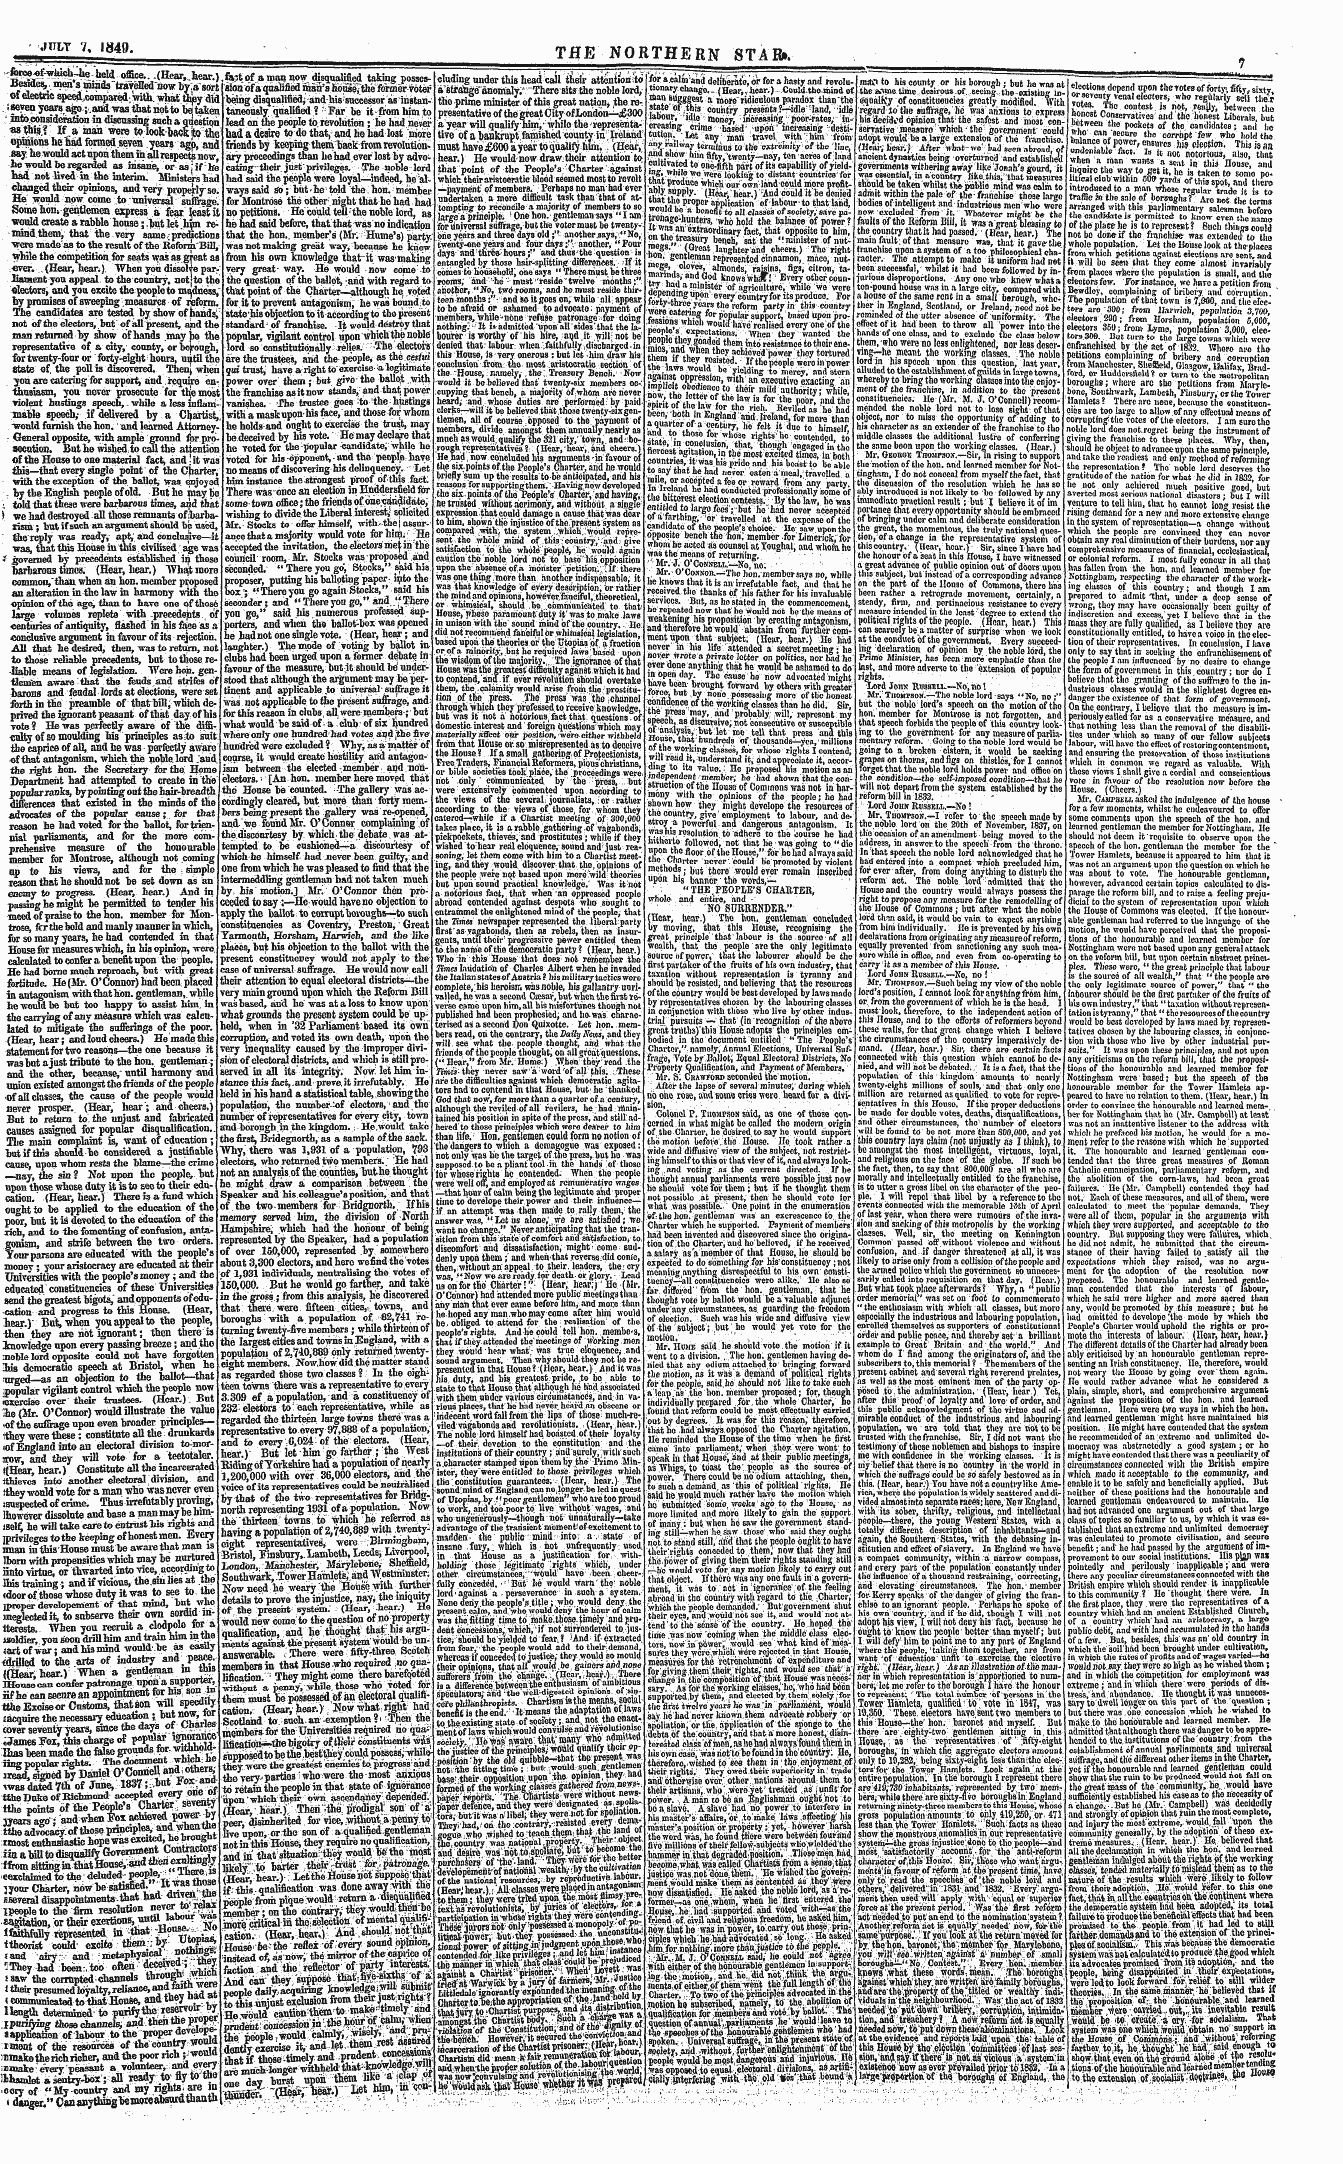 Northern Star (1837-1852): jS F Y, 3rd edition - : *& ^^ Wl*Ich-Lie-Held Office. , .(Hear...